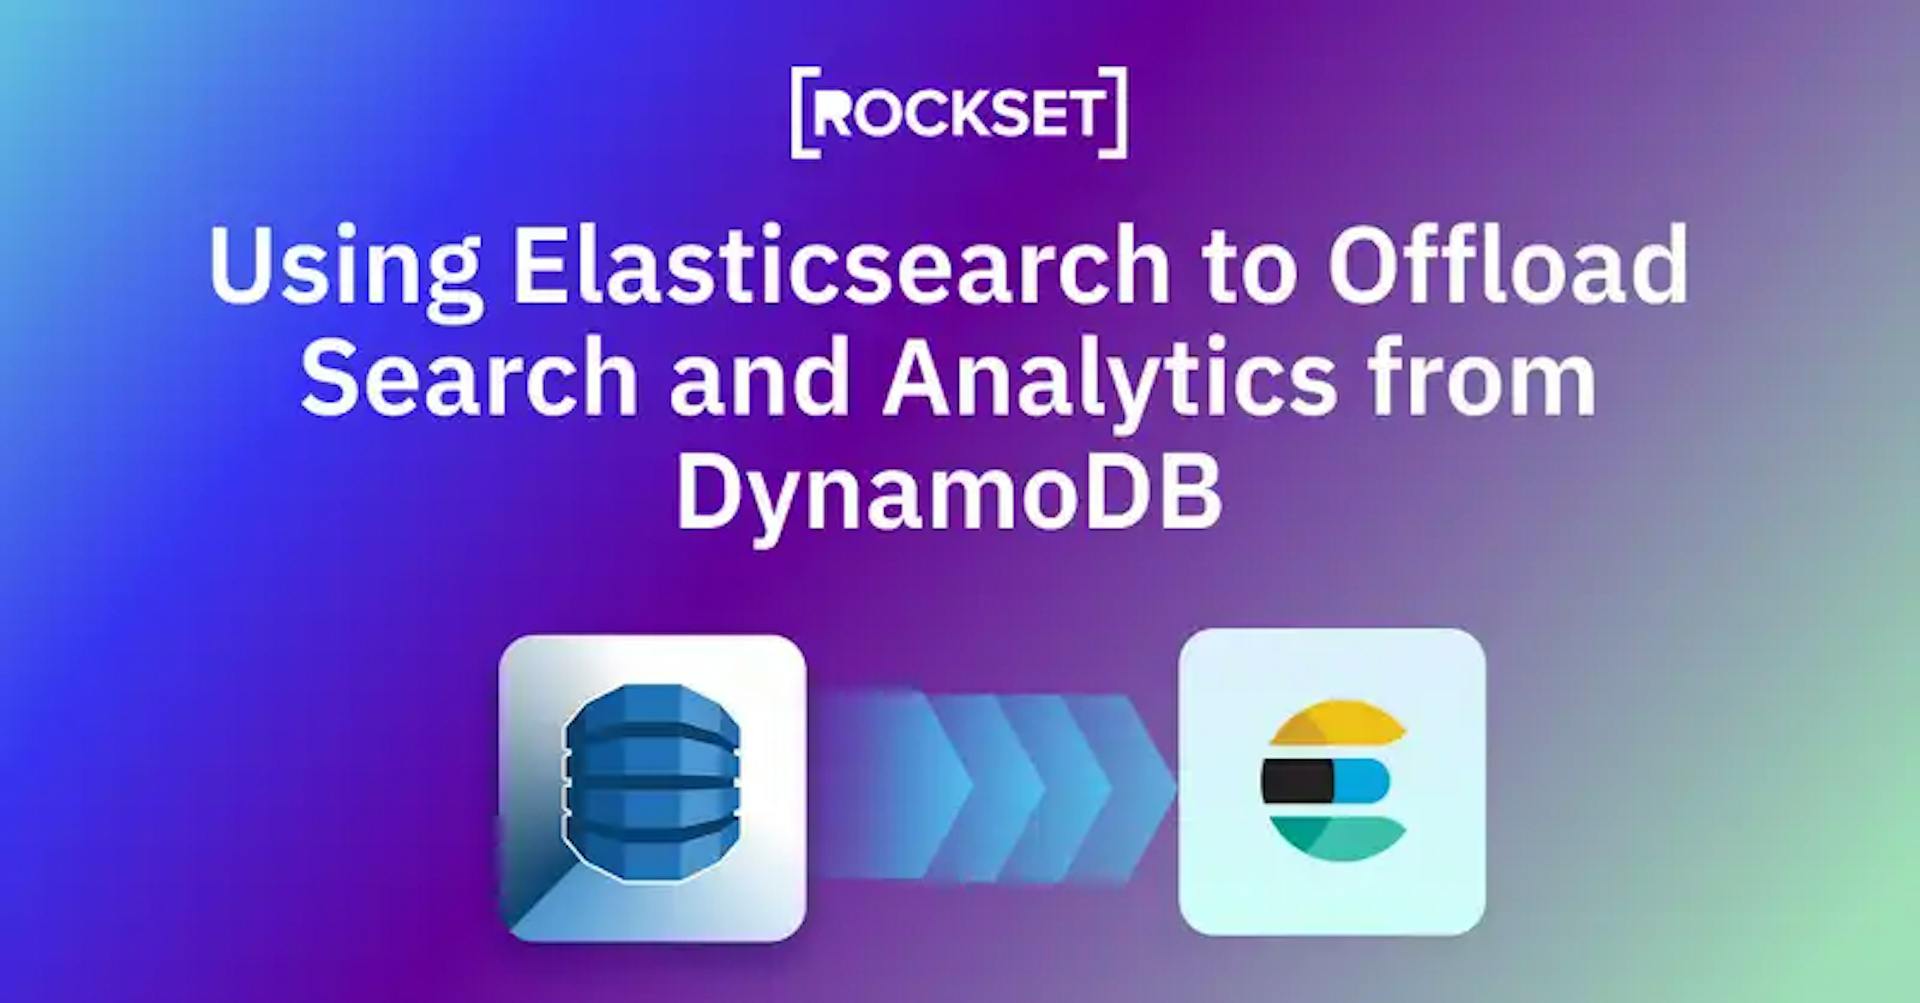 featured image - 使用 Elasticsearch 卸载 DynamoDB 的搜索和分析：优点和缺点